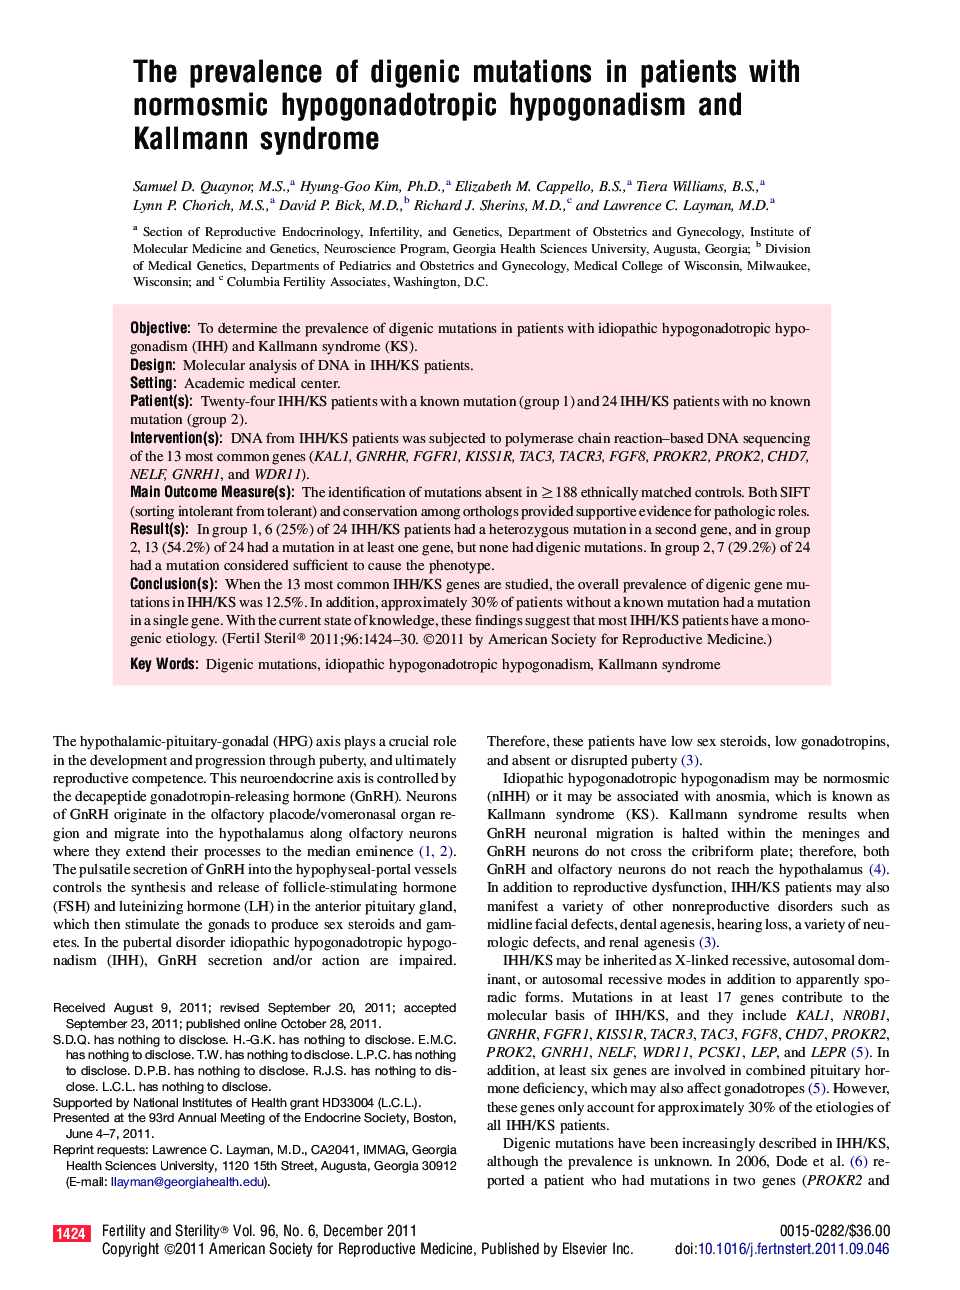 The prevalence of digenic mutations in patients with normosmic hypogonadotropic hypogonadism and Kallmann syndrome